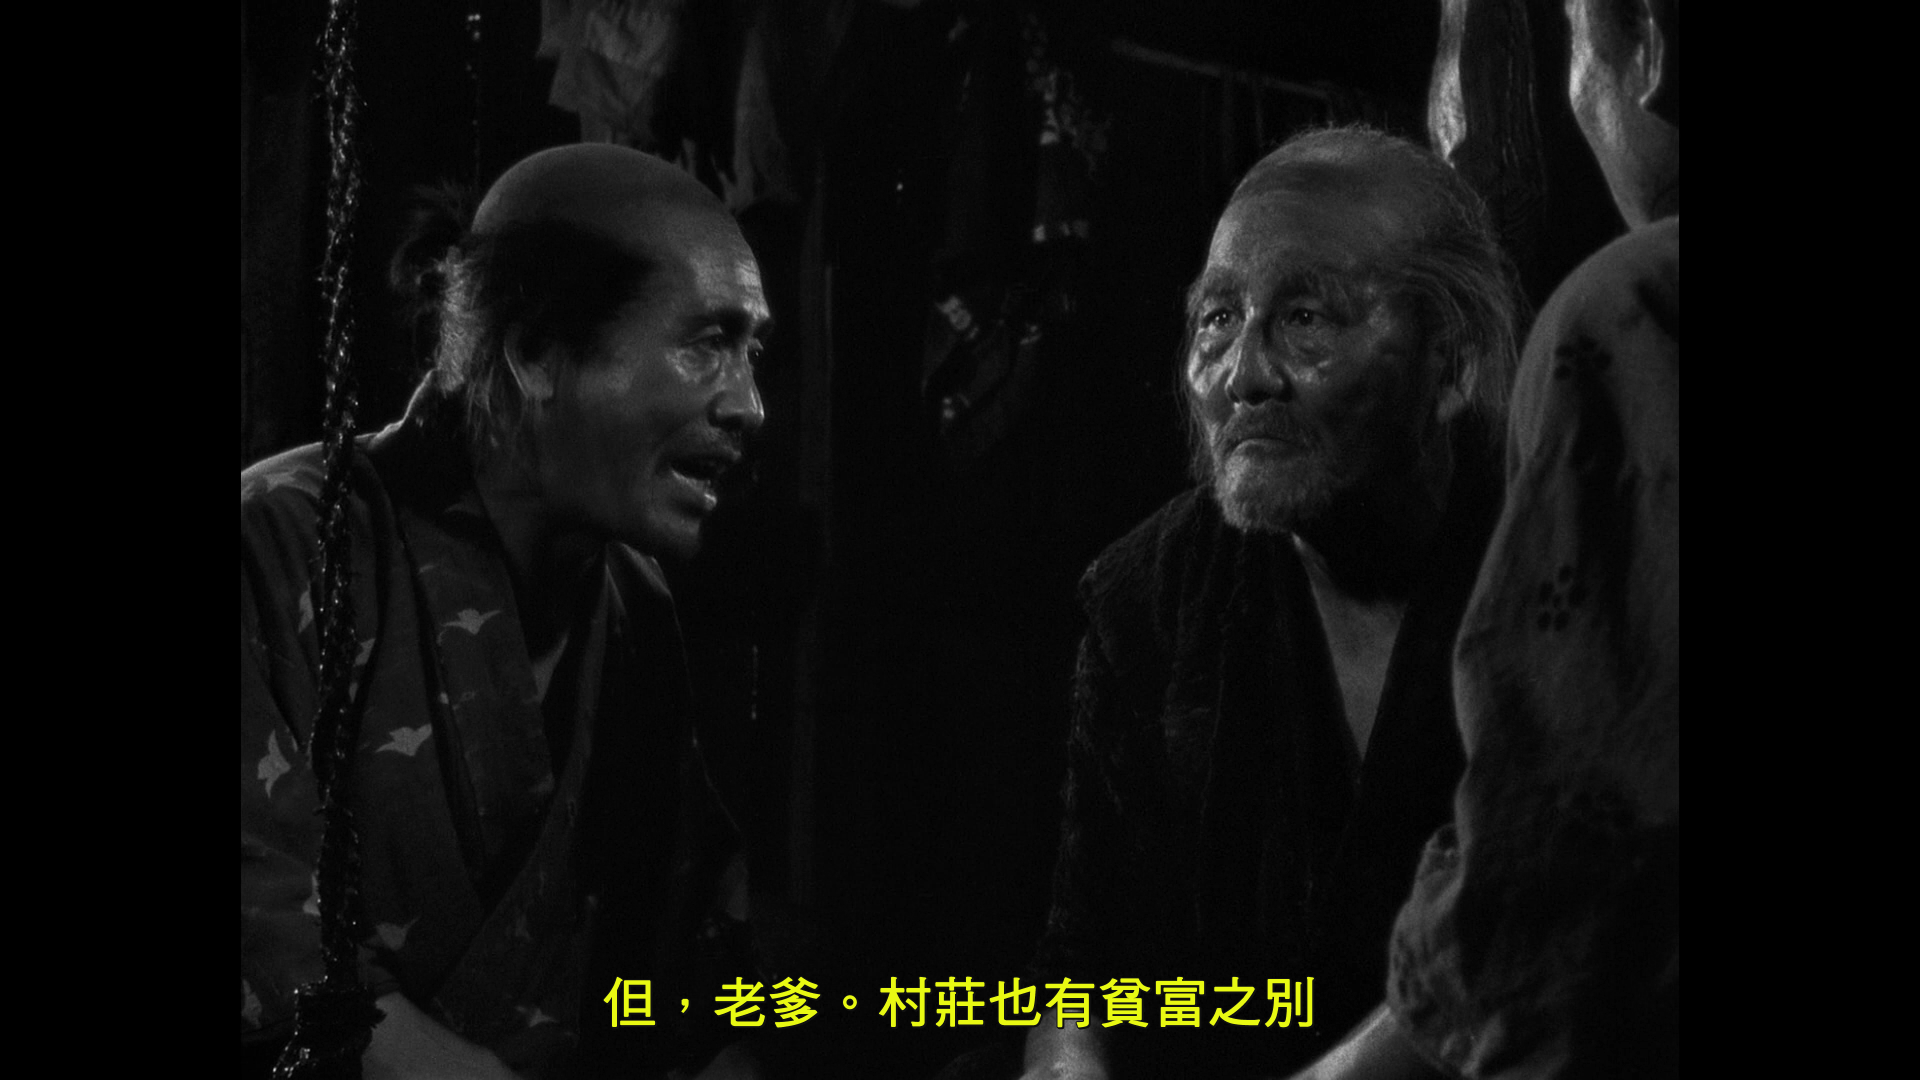 [七武士].Seven.Samurai.1954.CC.BluRay.1080p.AVC.LPCM.2.0DIY@weiwei2001  46.26G-7.png